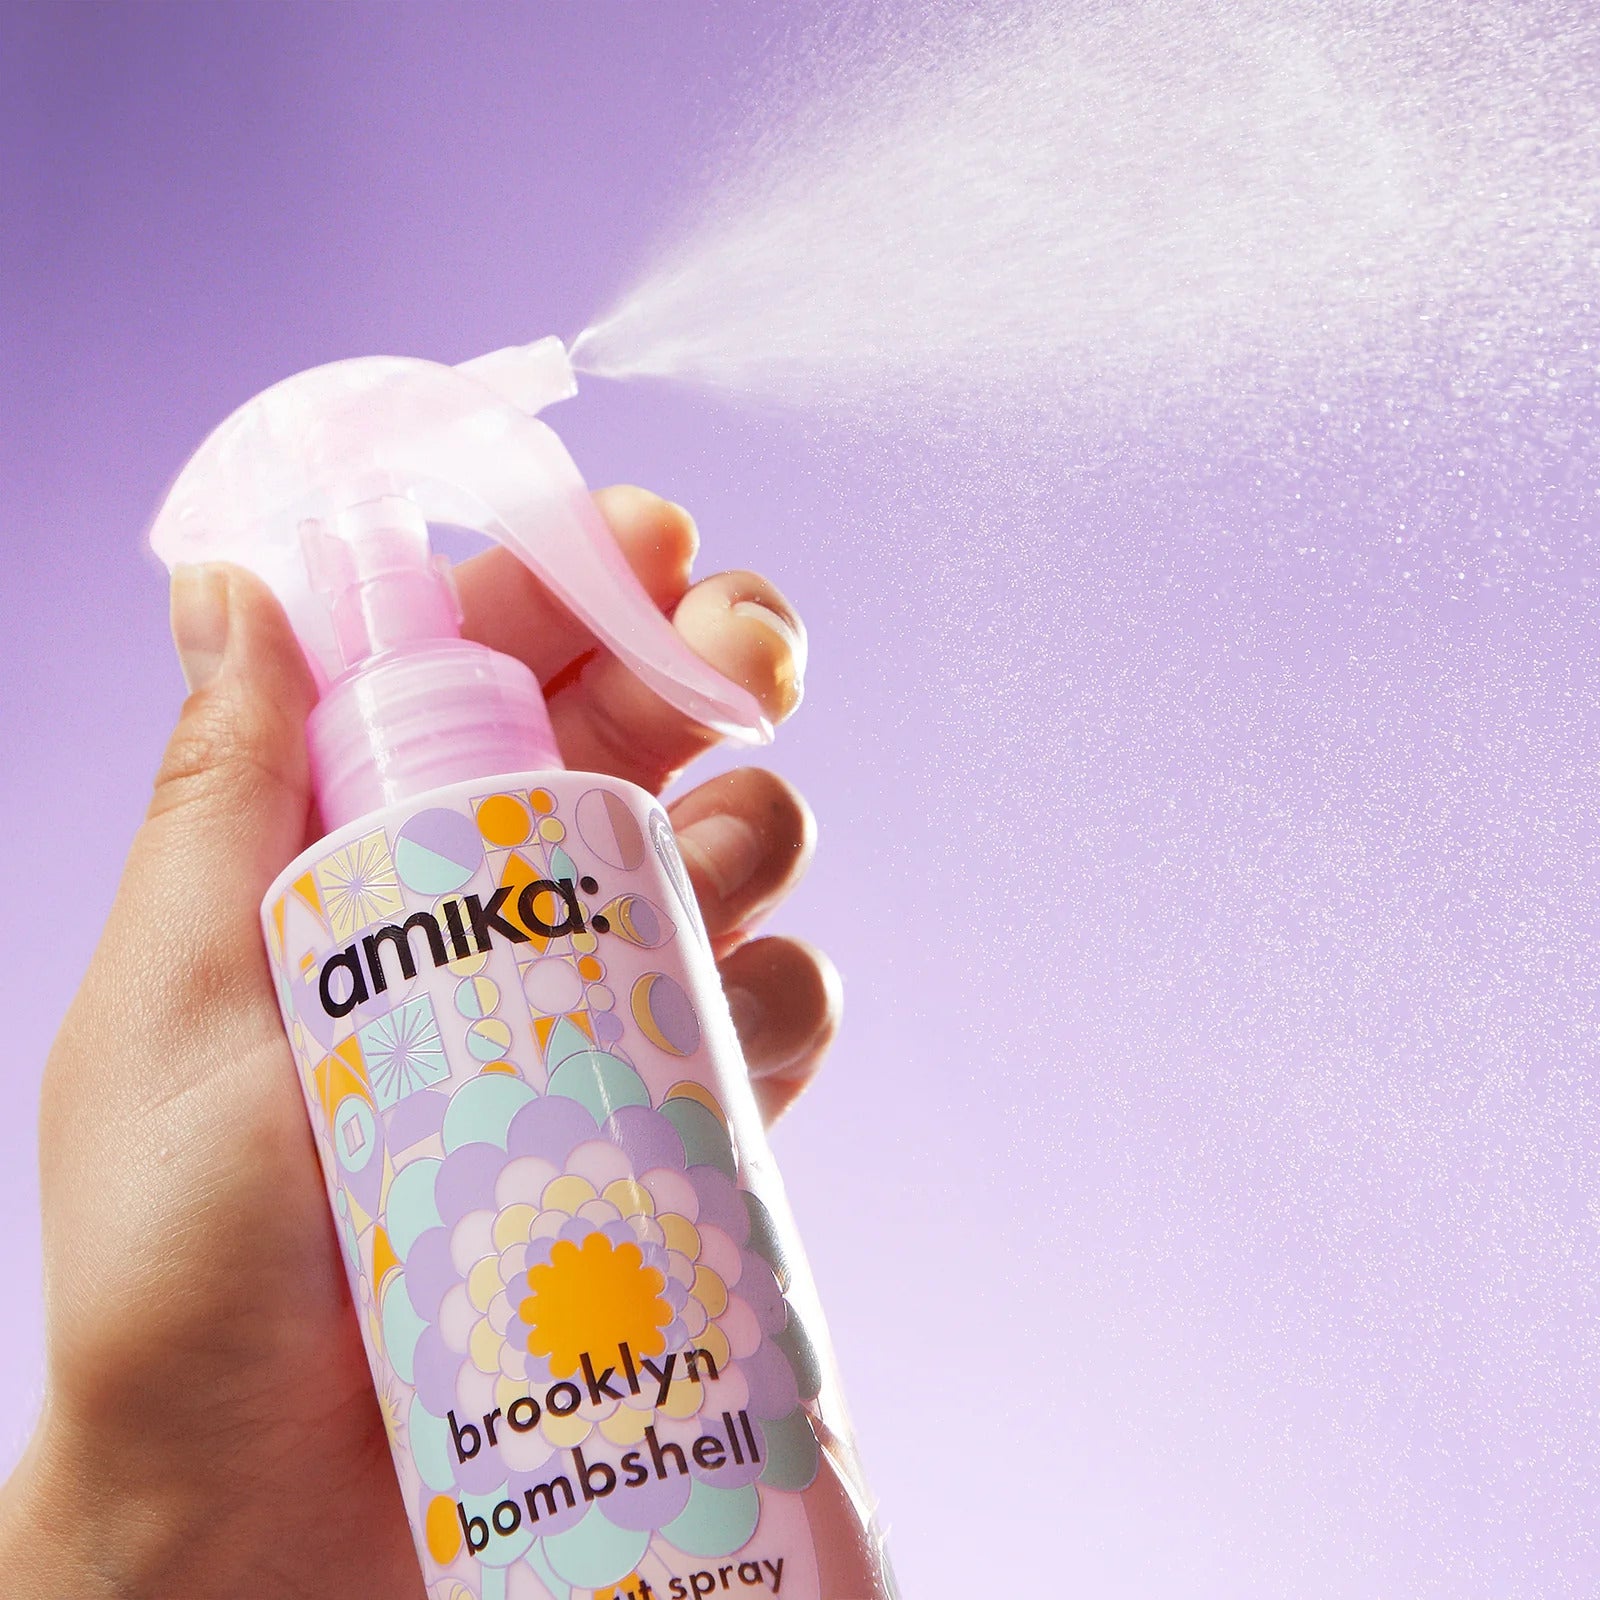 Weightless spray by Amika (Brooklyn Bombshell Blowout Spray)